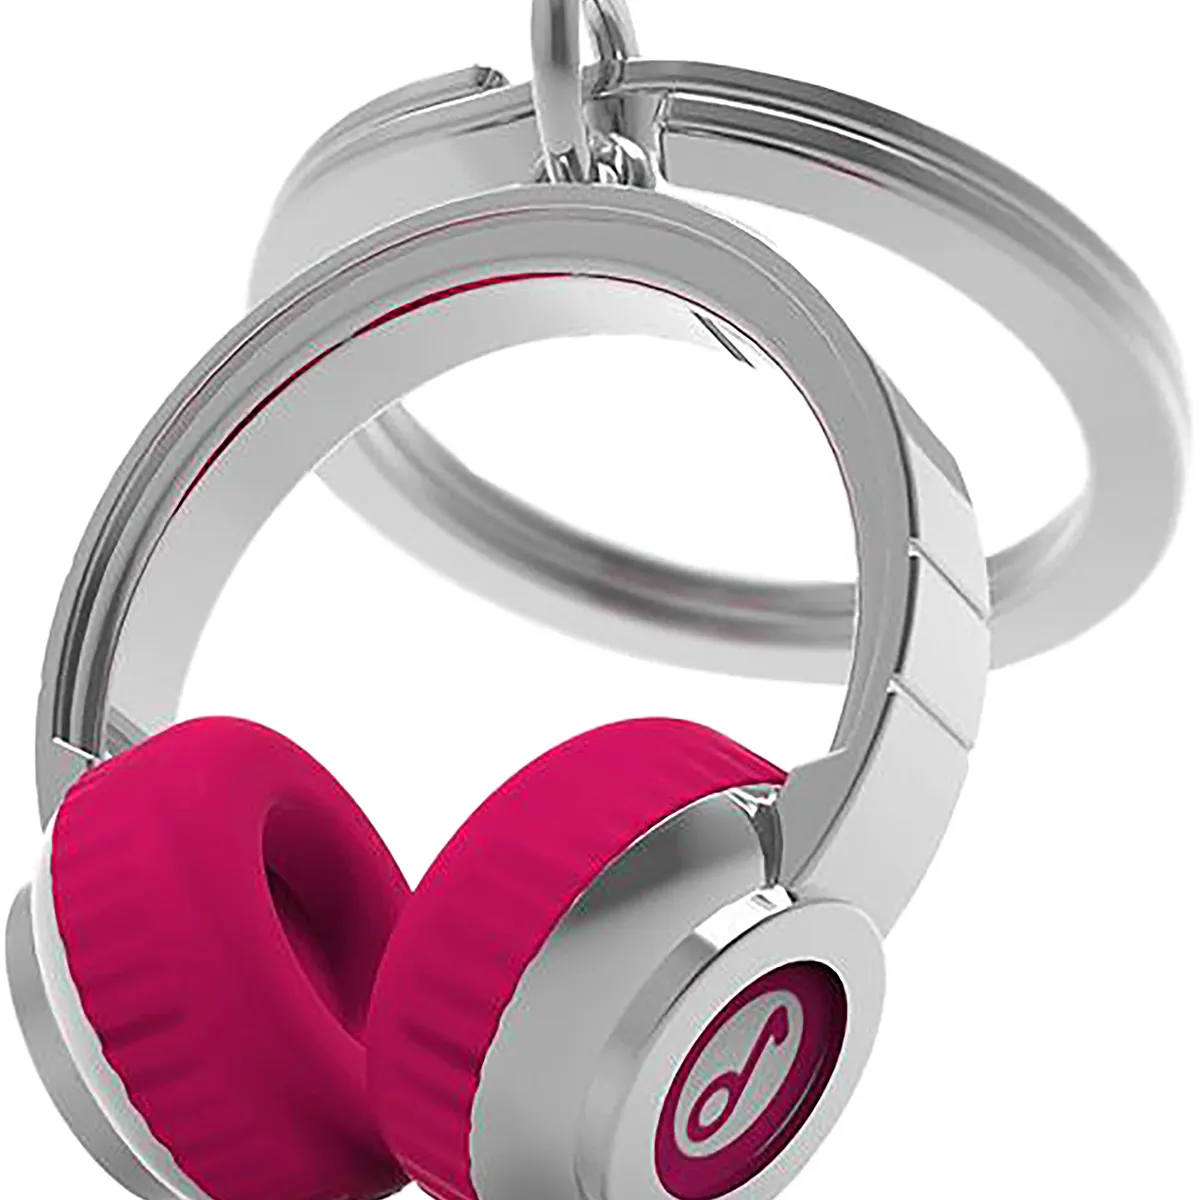 Kopfhörer Schlüsselanhänger in pink